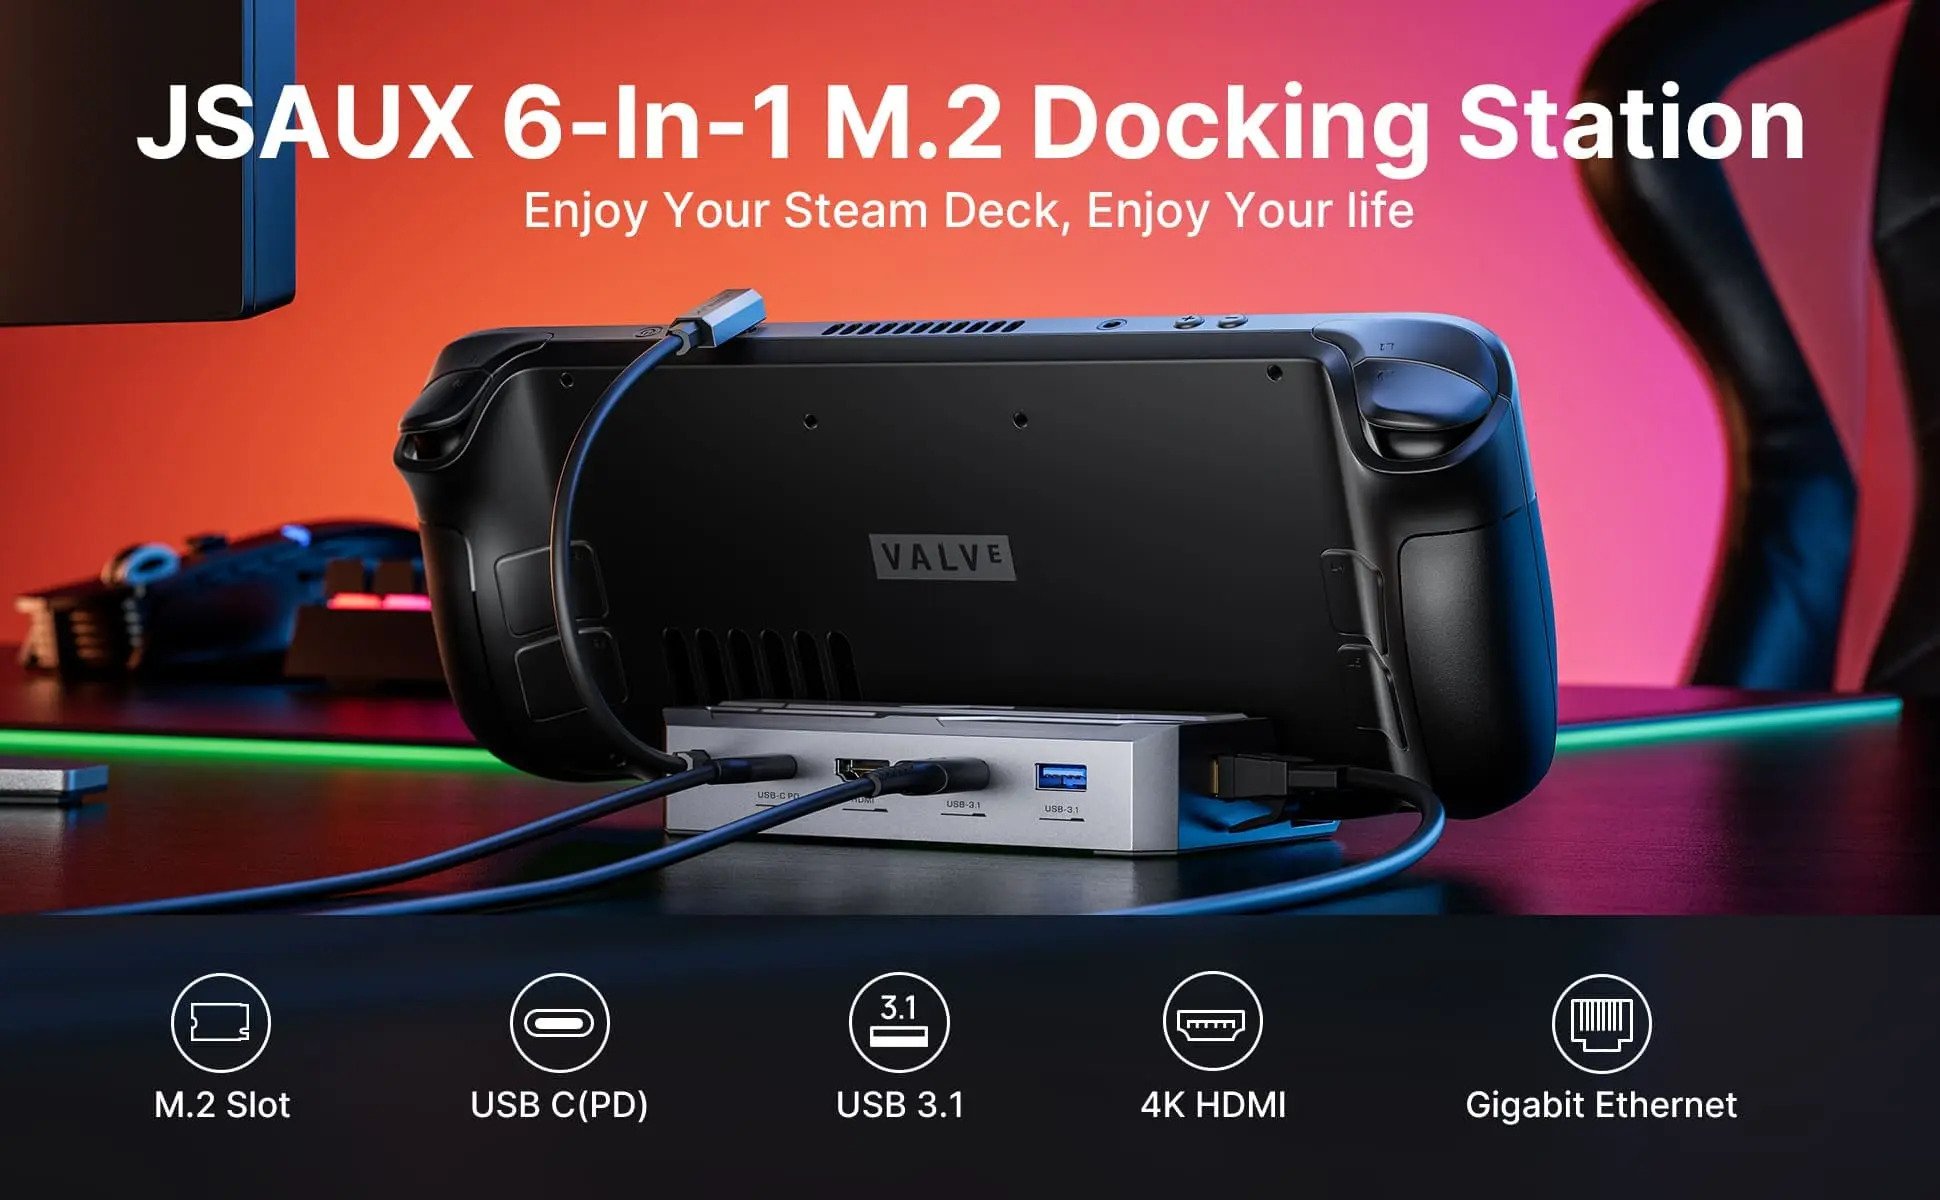 Jsaux M.2 Steam Docking Station review – a superb Steam Deck Dock